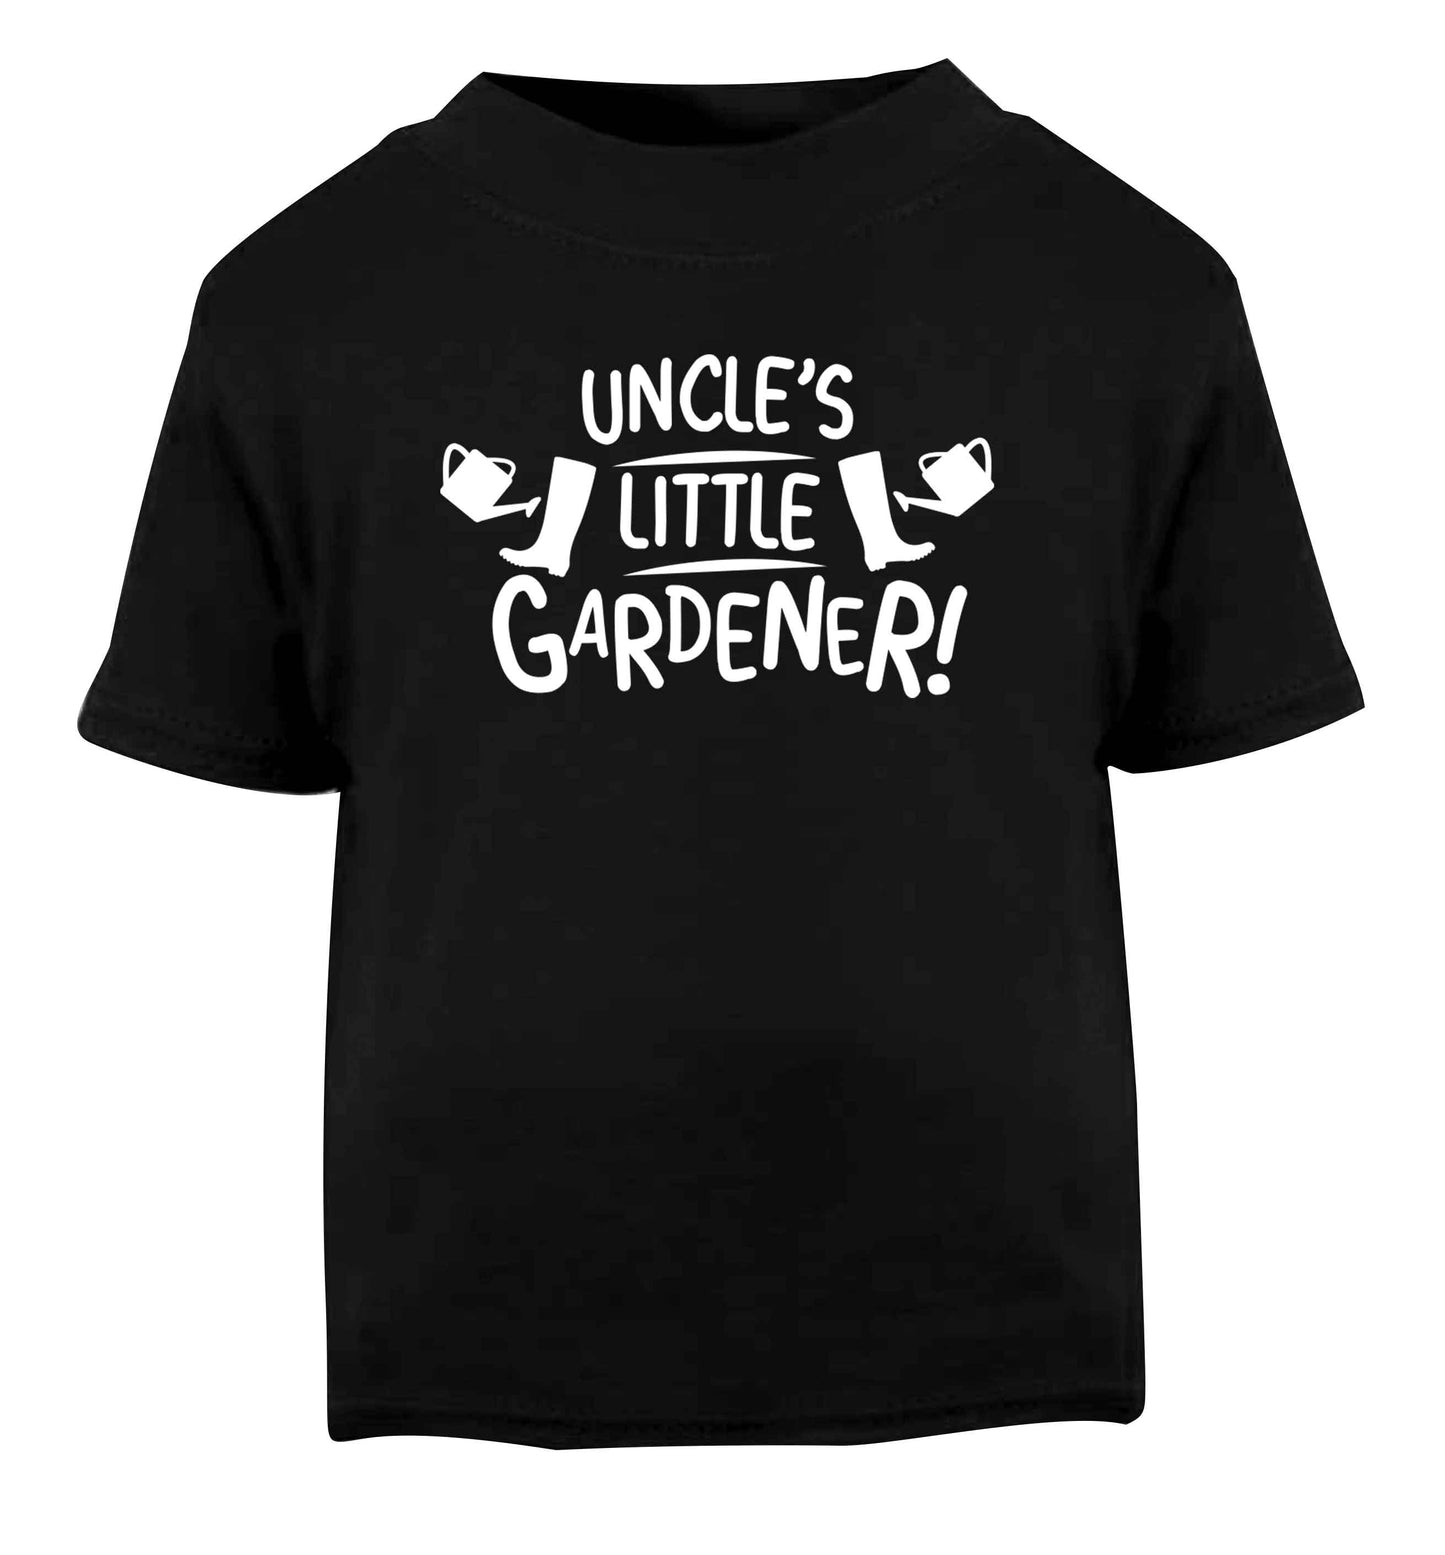 Uncle's little gardener Black Baby Toddler Tshirt 2 years